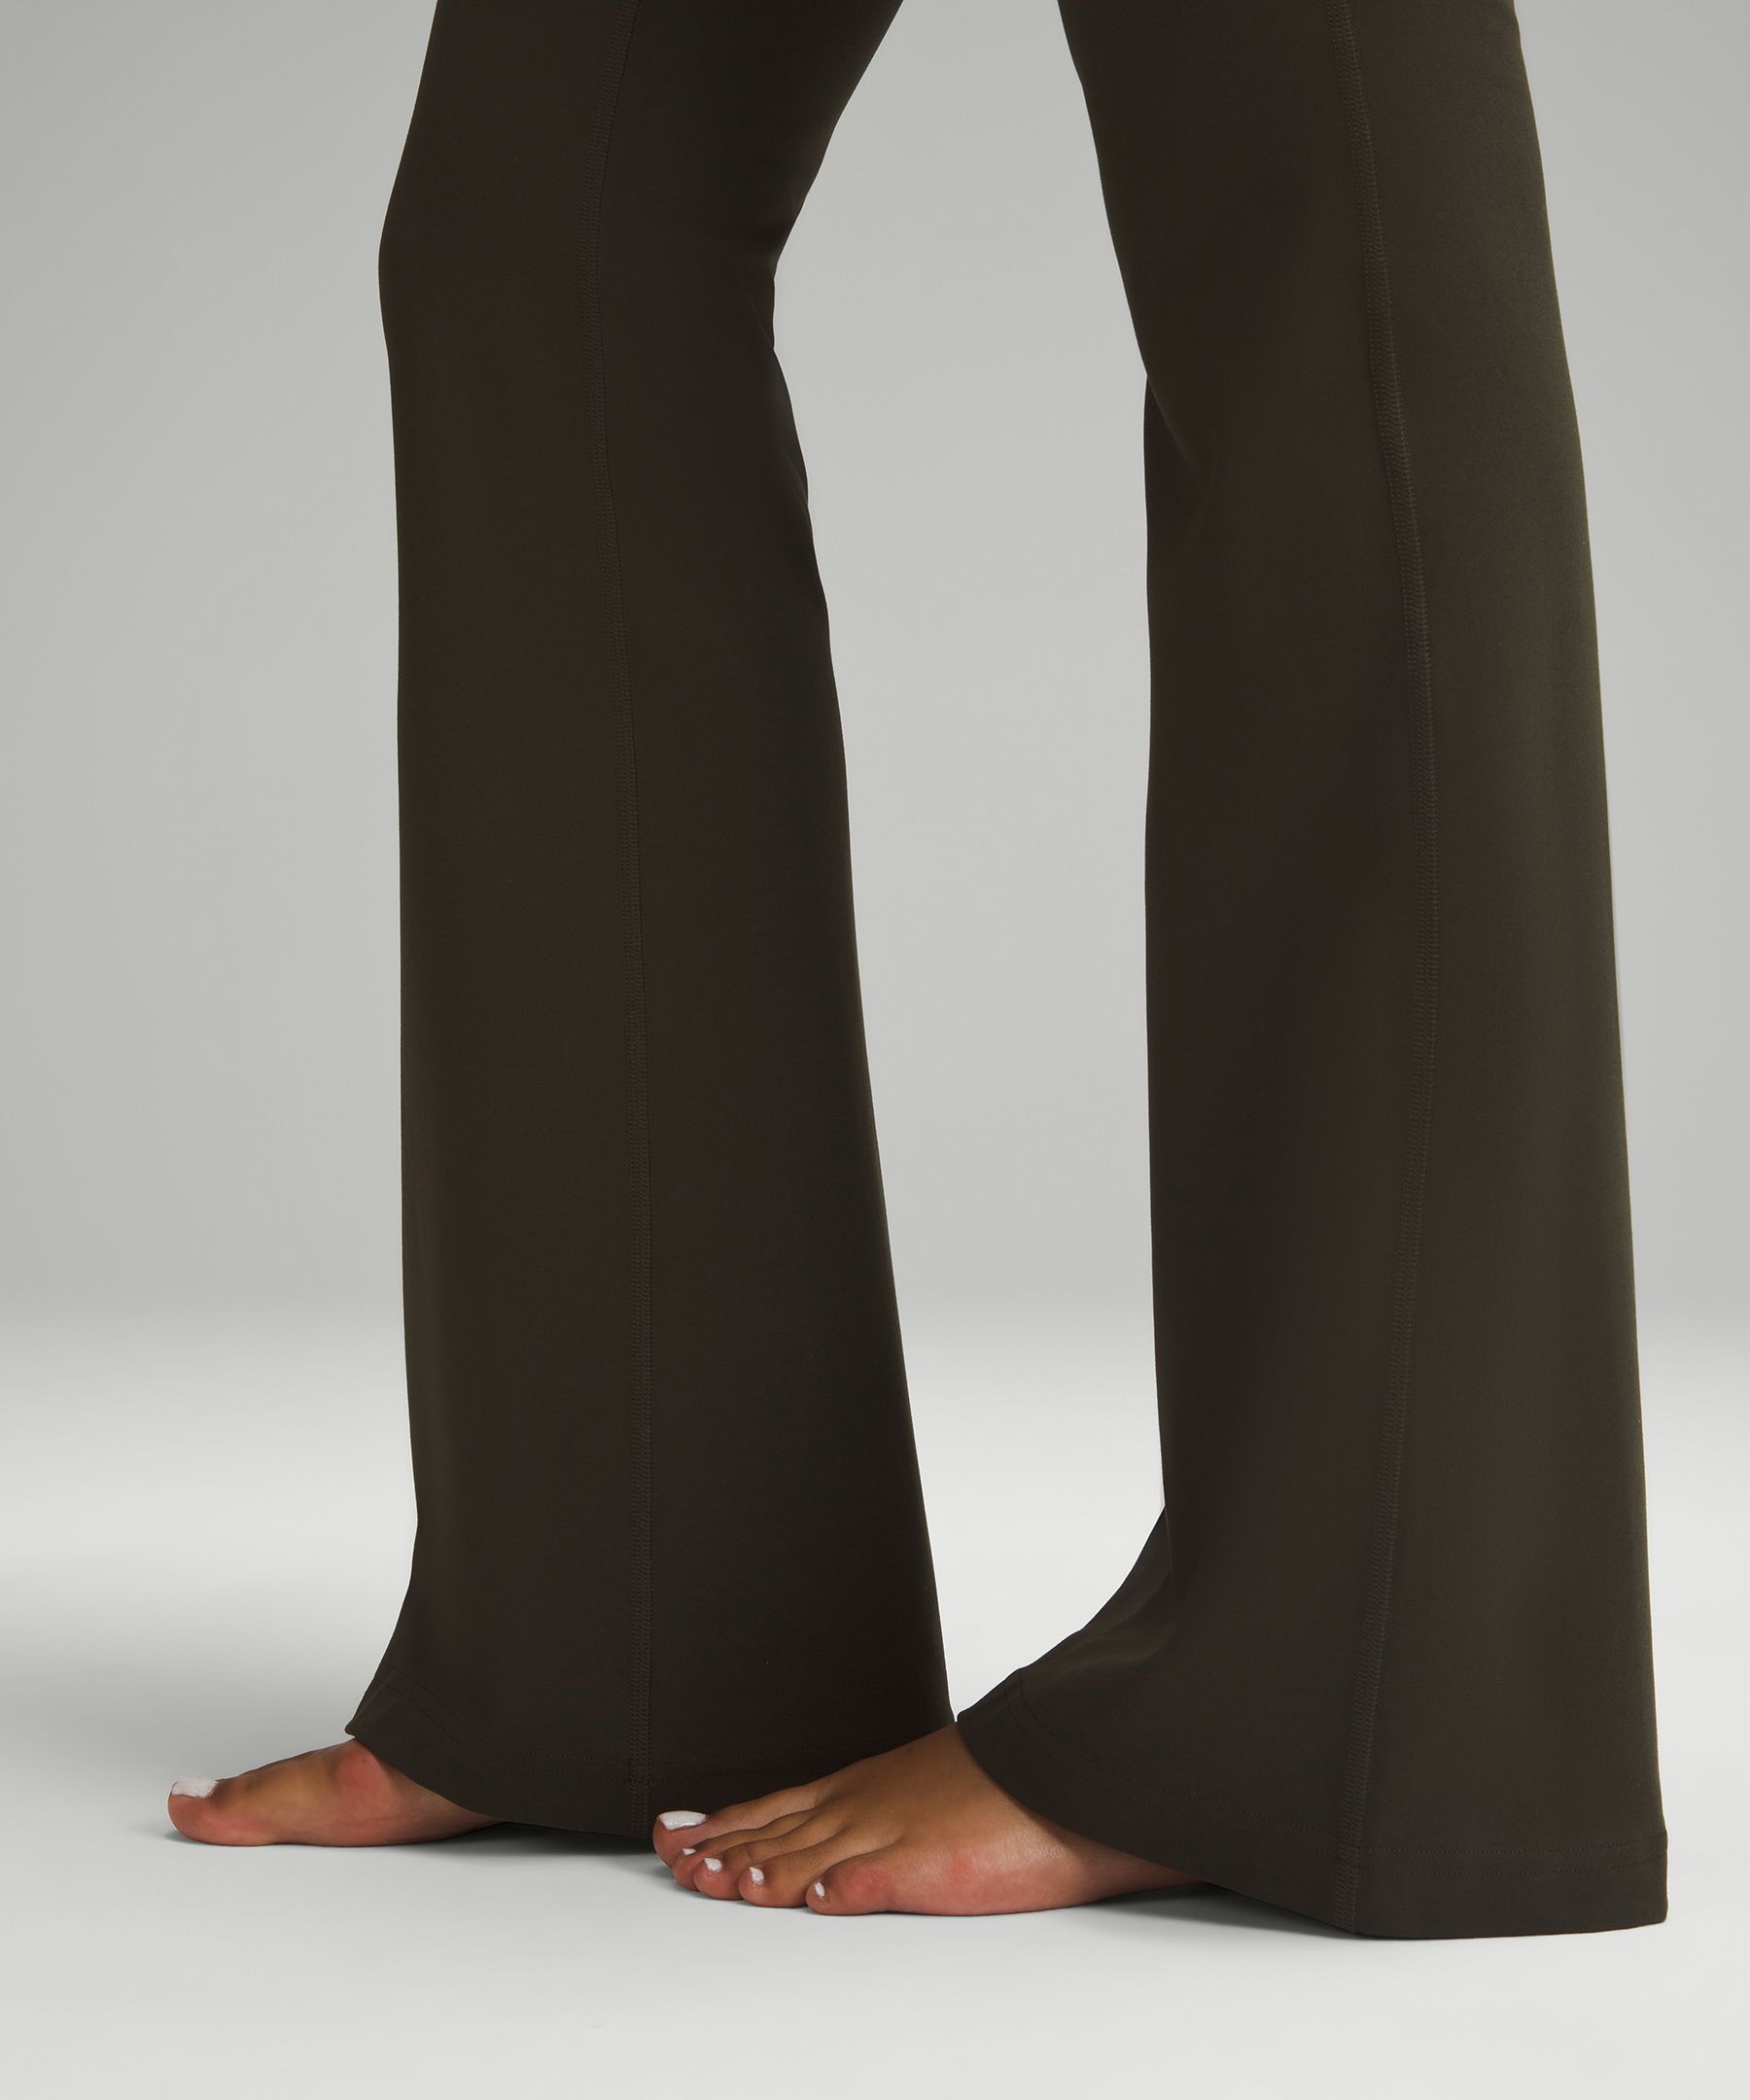 Lululemon Black Flare Leggings Size 6 - $65 (40% Off Retail) - From tori